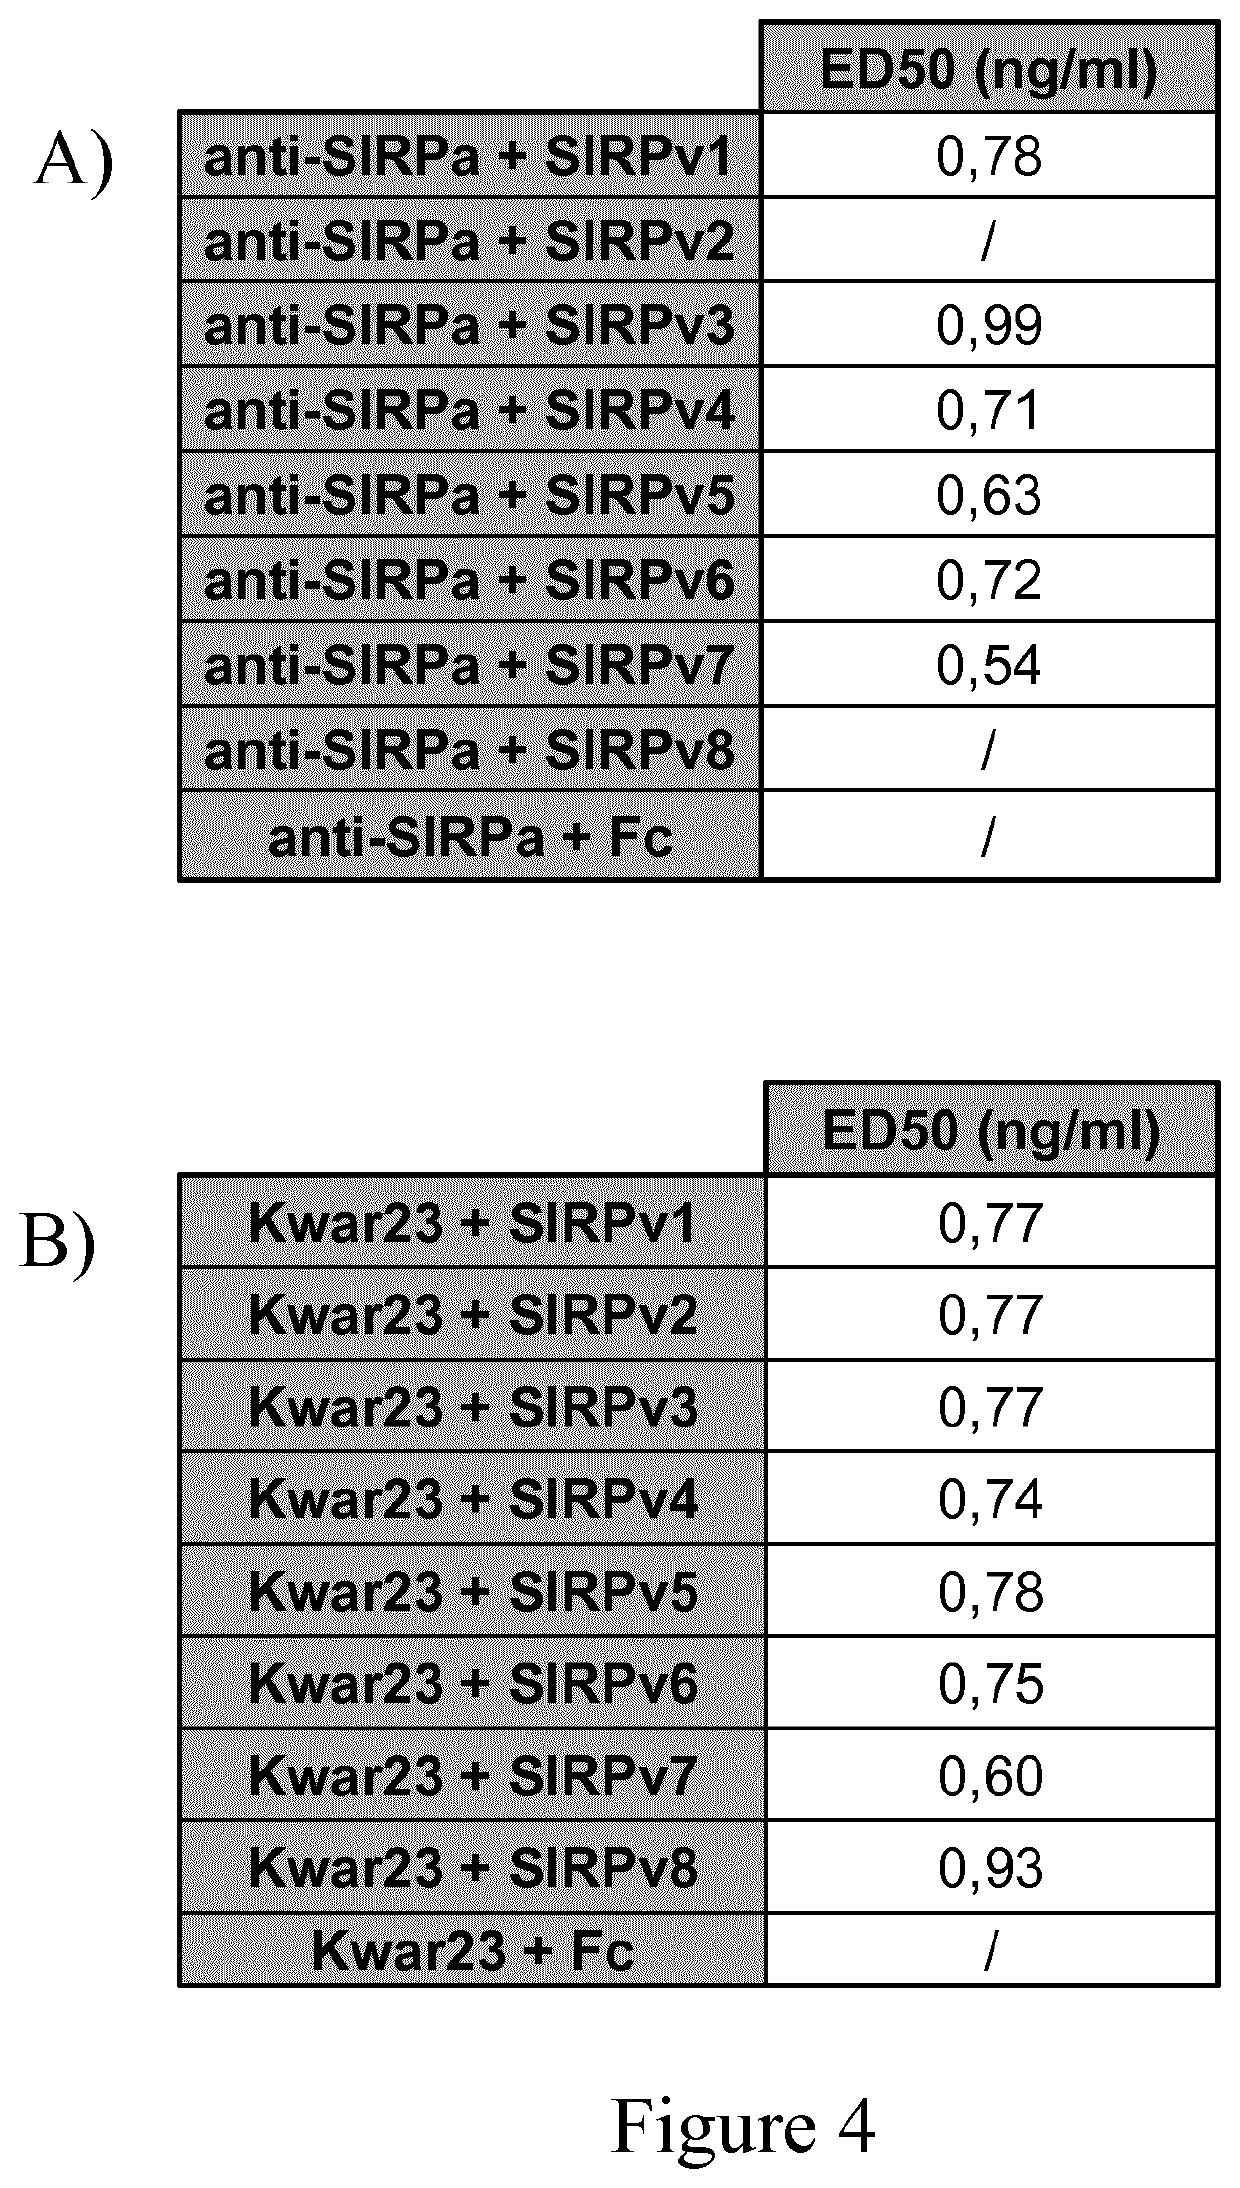 Use of Anti-human sirpa v1 antibodies and method for producing Anti-sirpa v1 antibodies